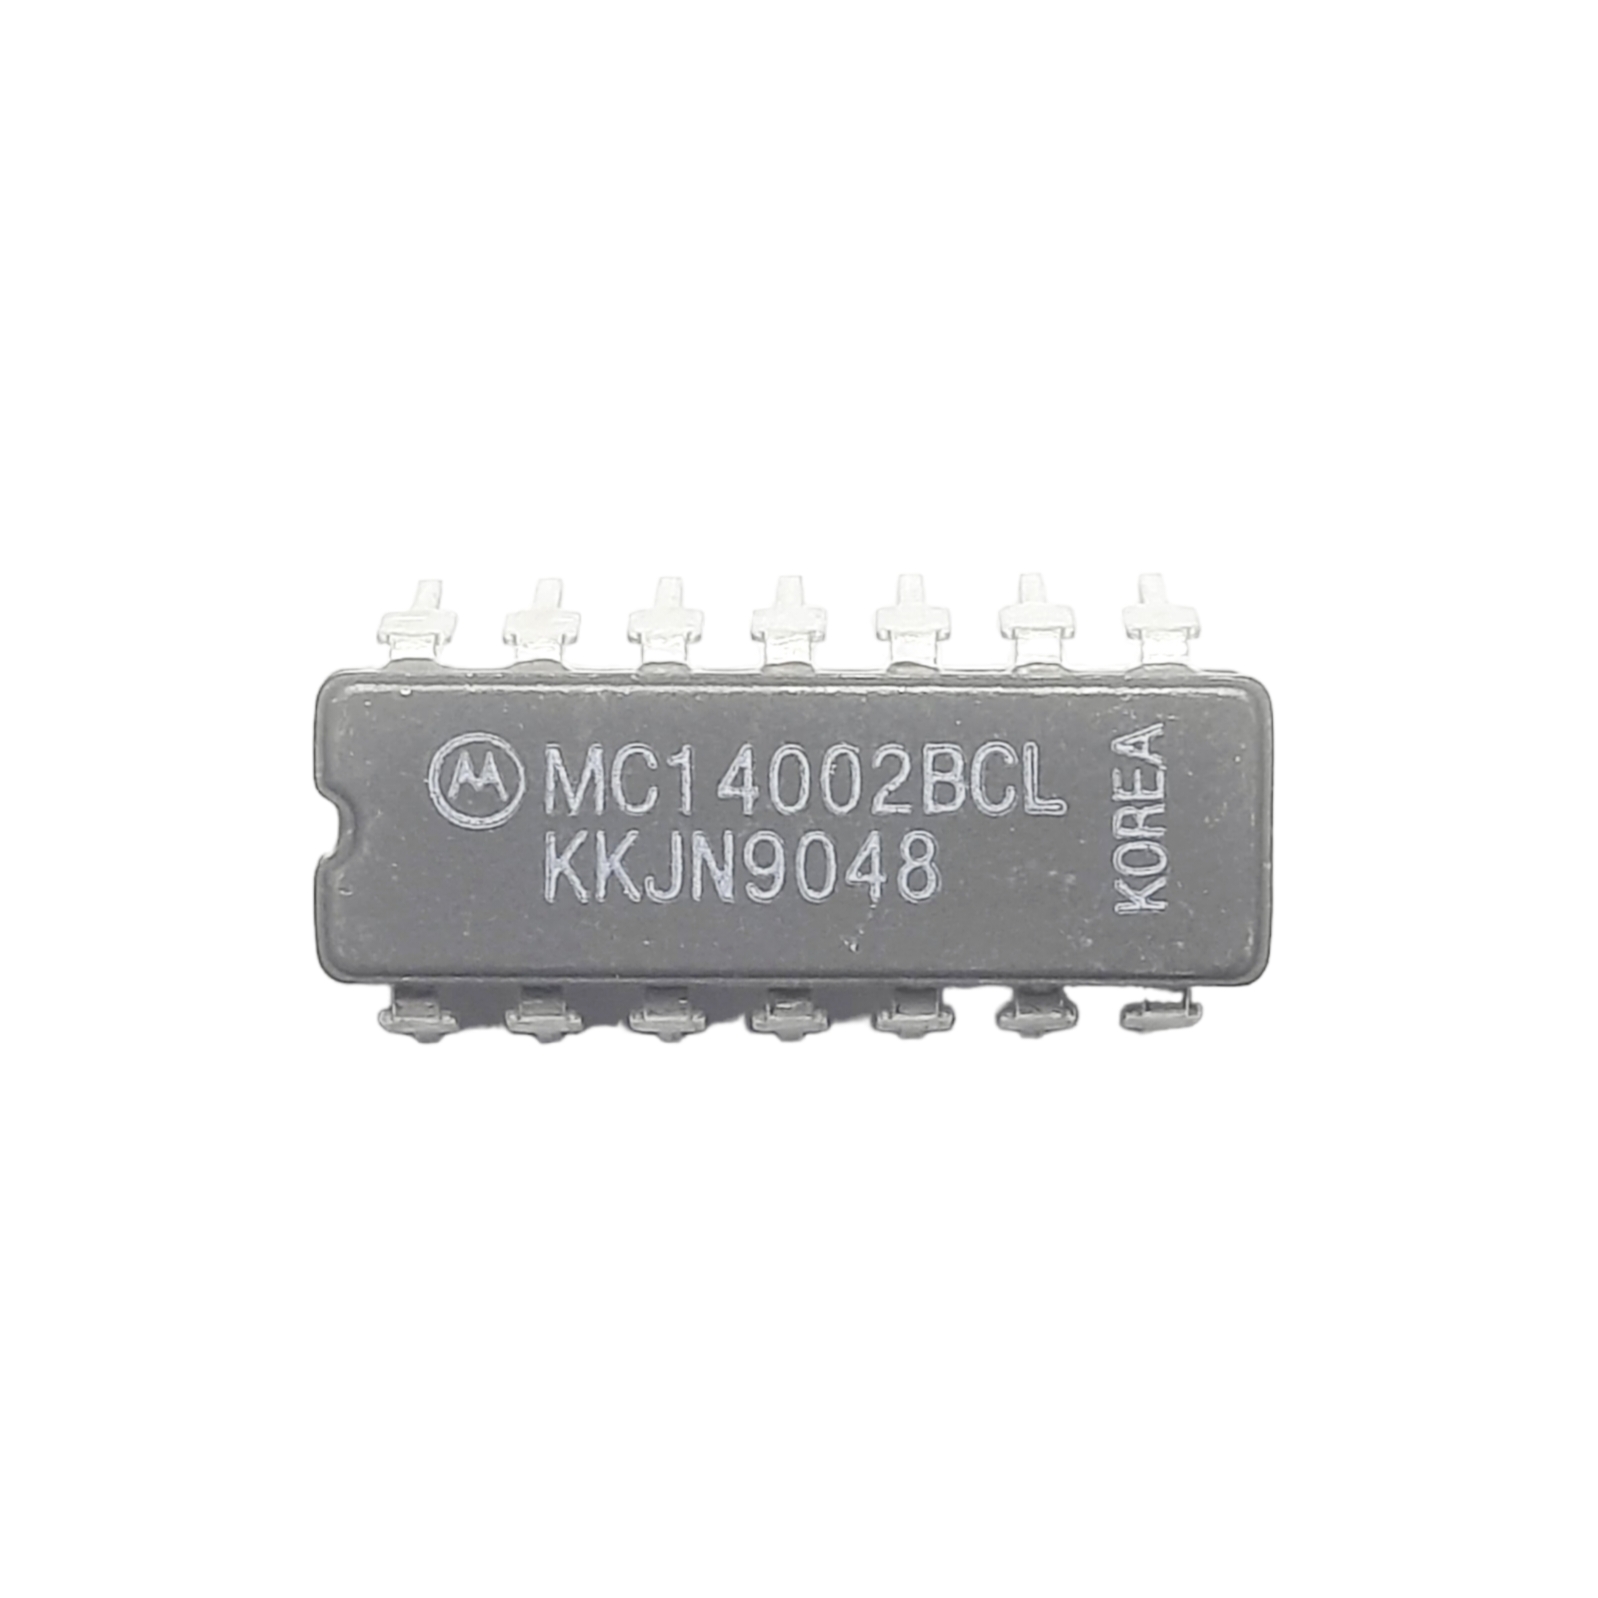 MC14002BCL